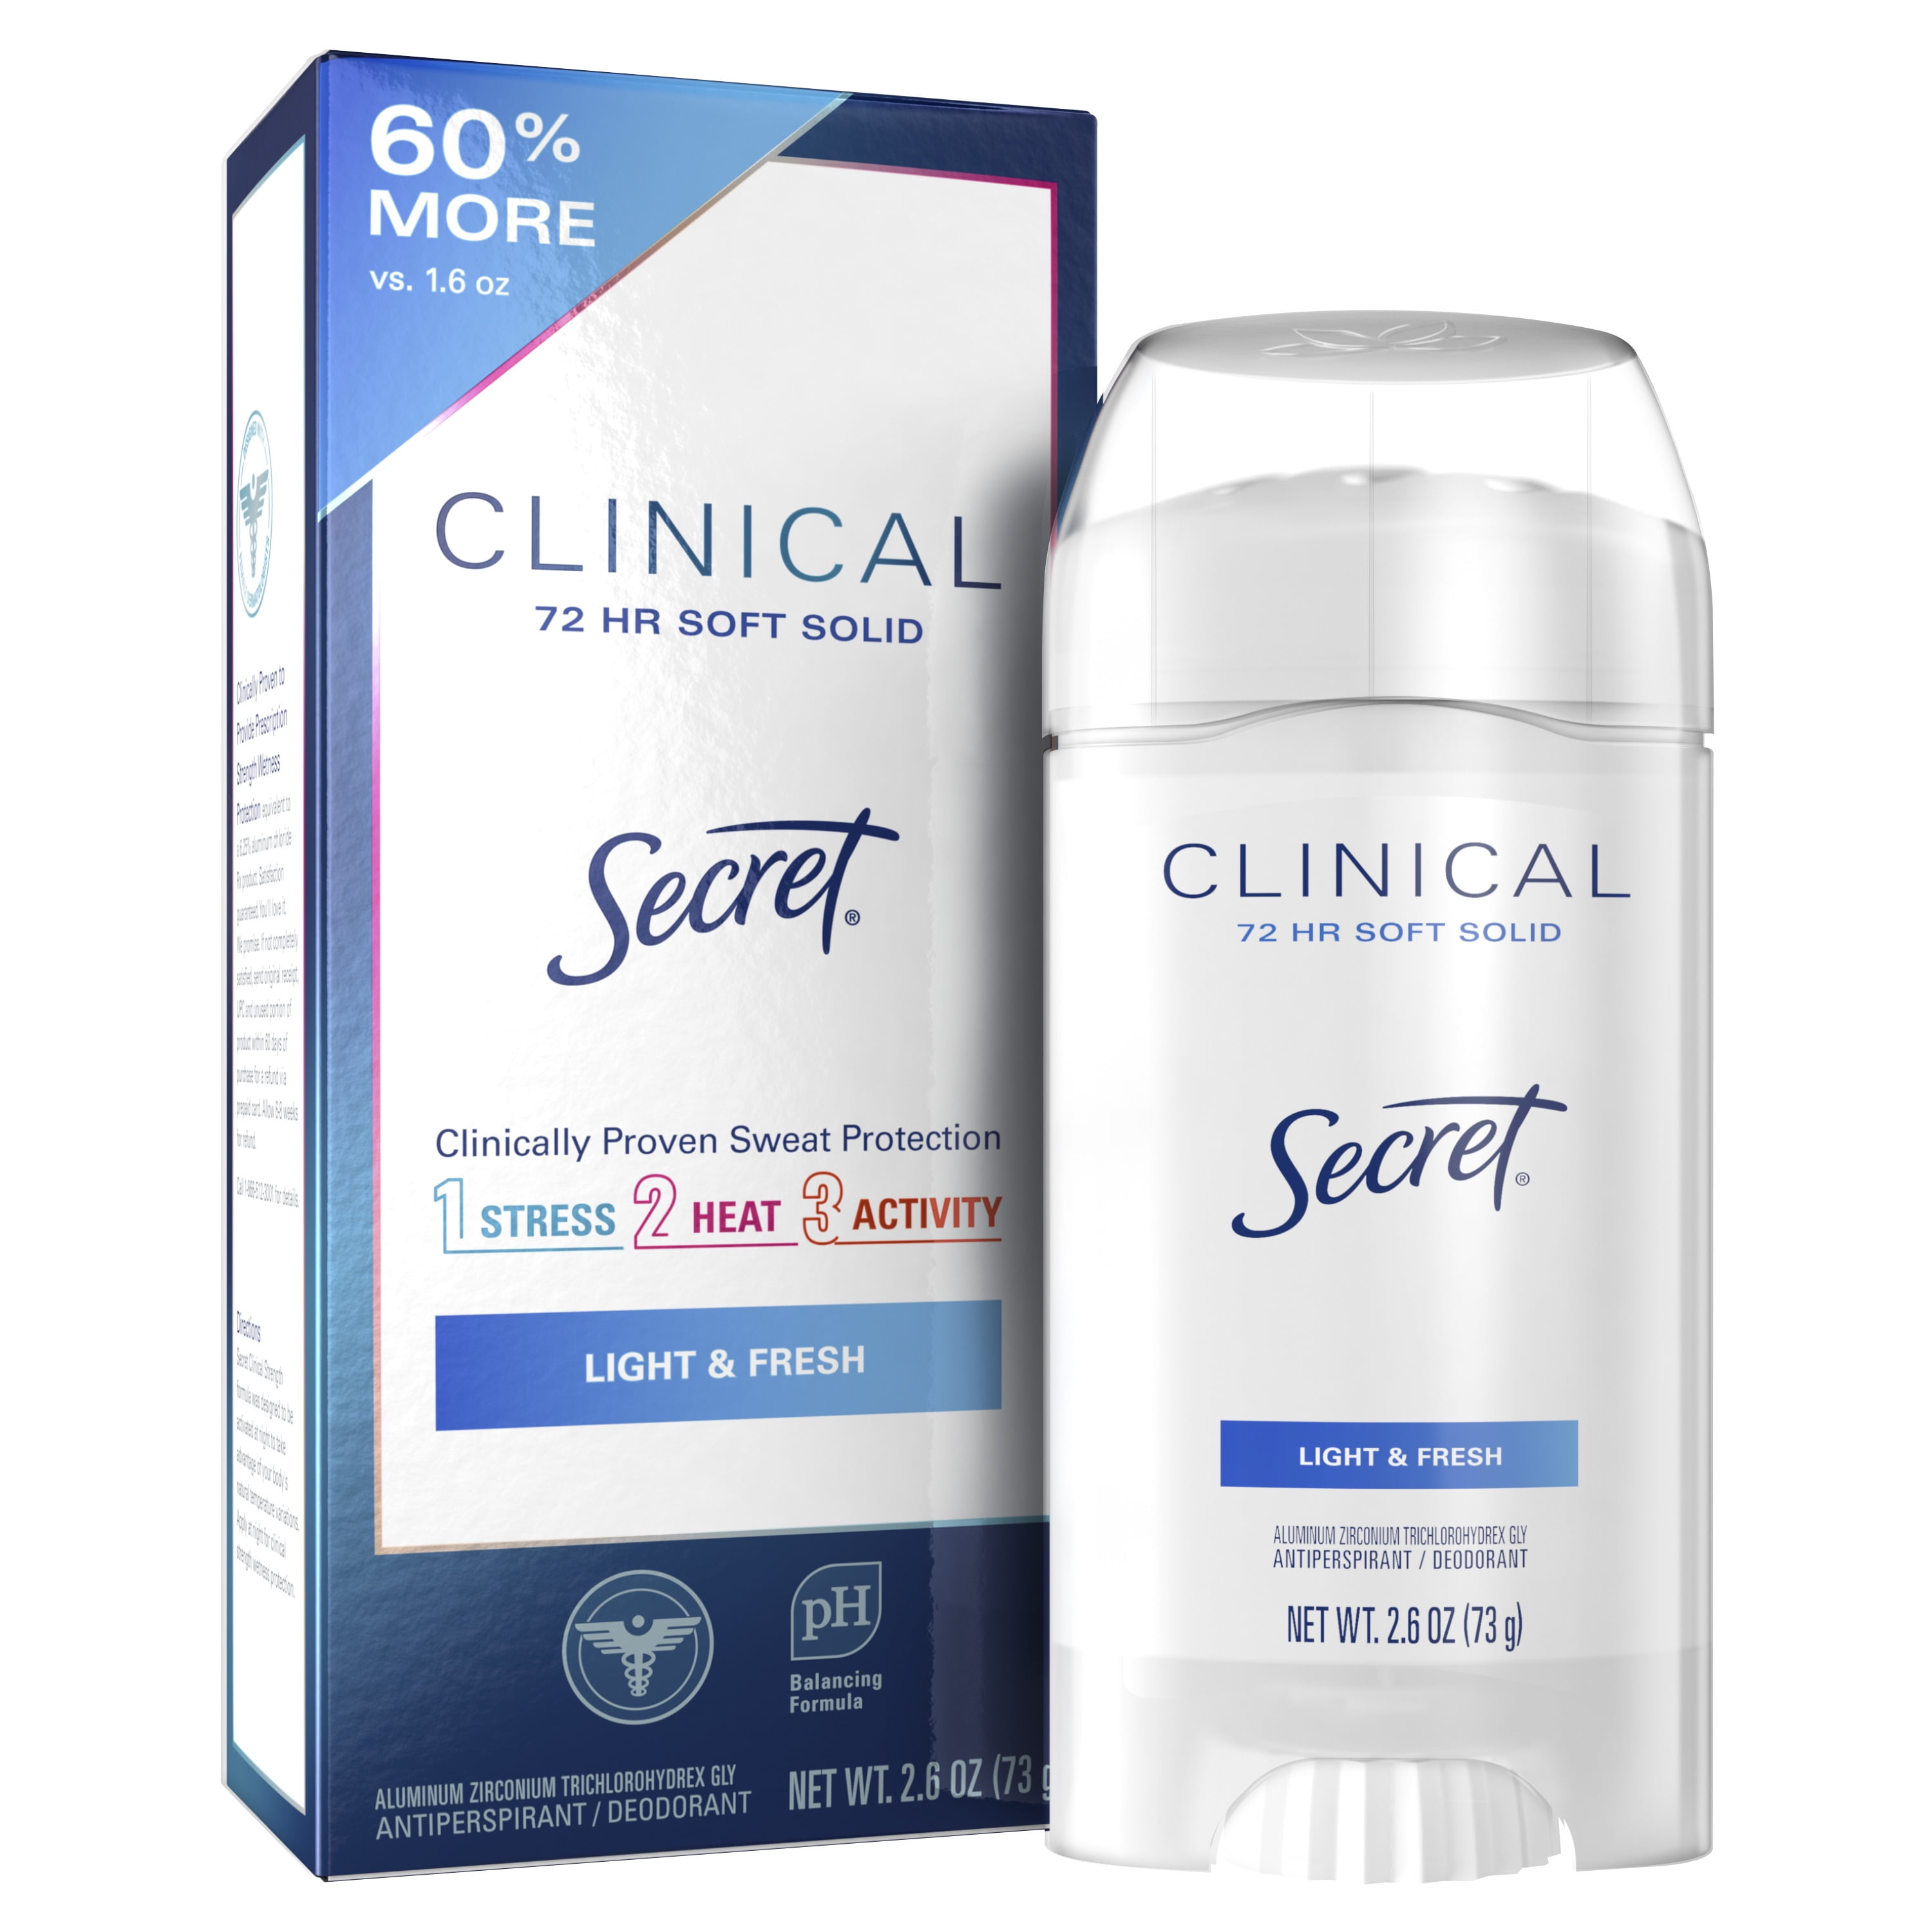 Secret Clinical Strength Soft Solid Antiperspirant and Deodorant, Light & Fresh, 2.6 oz